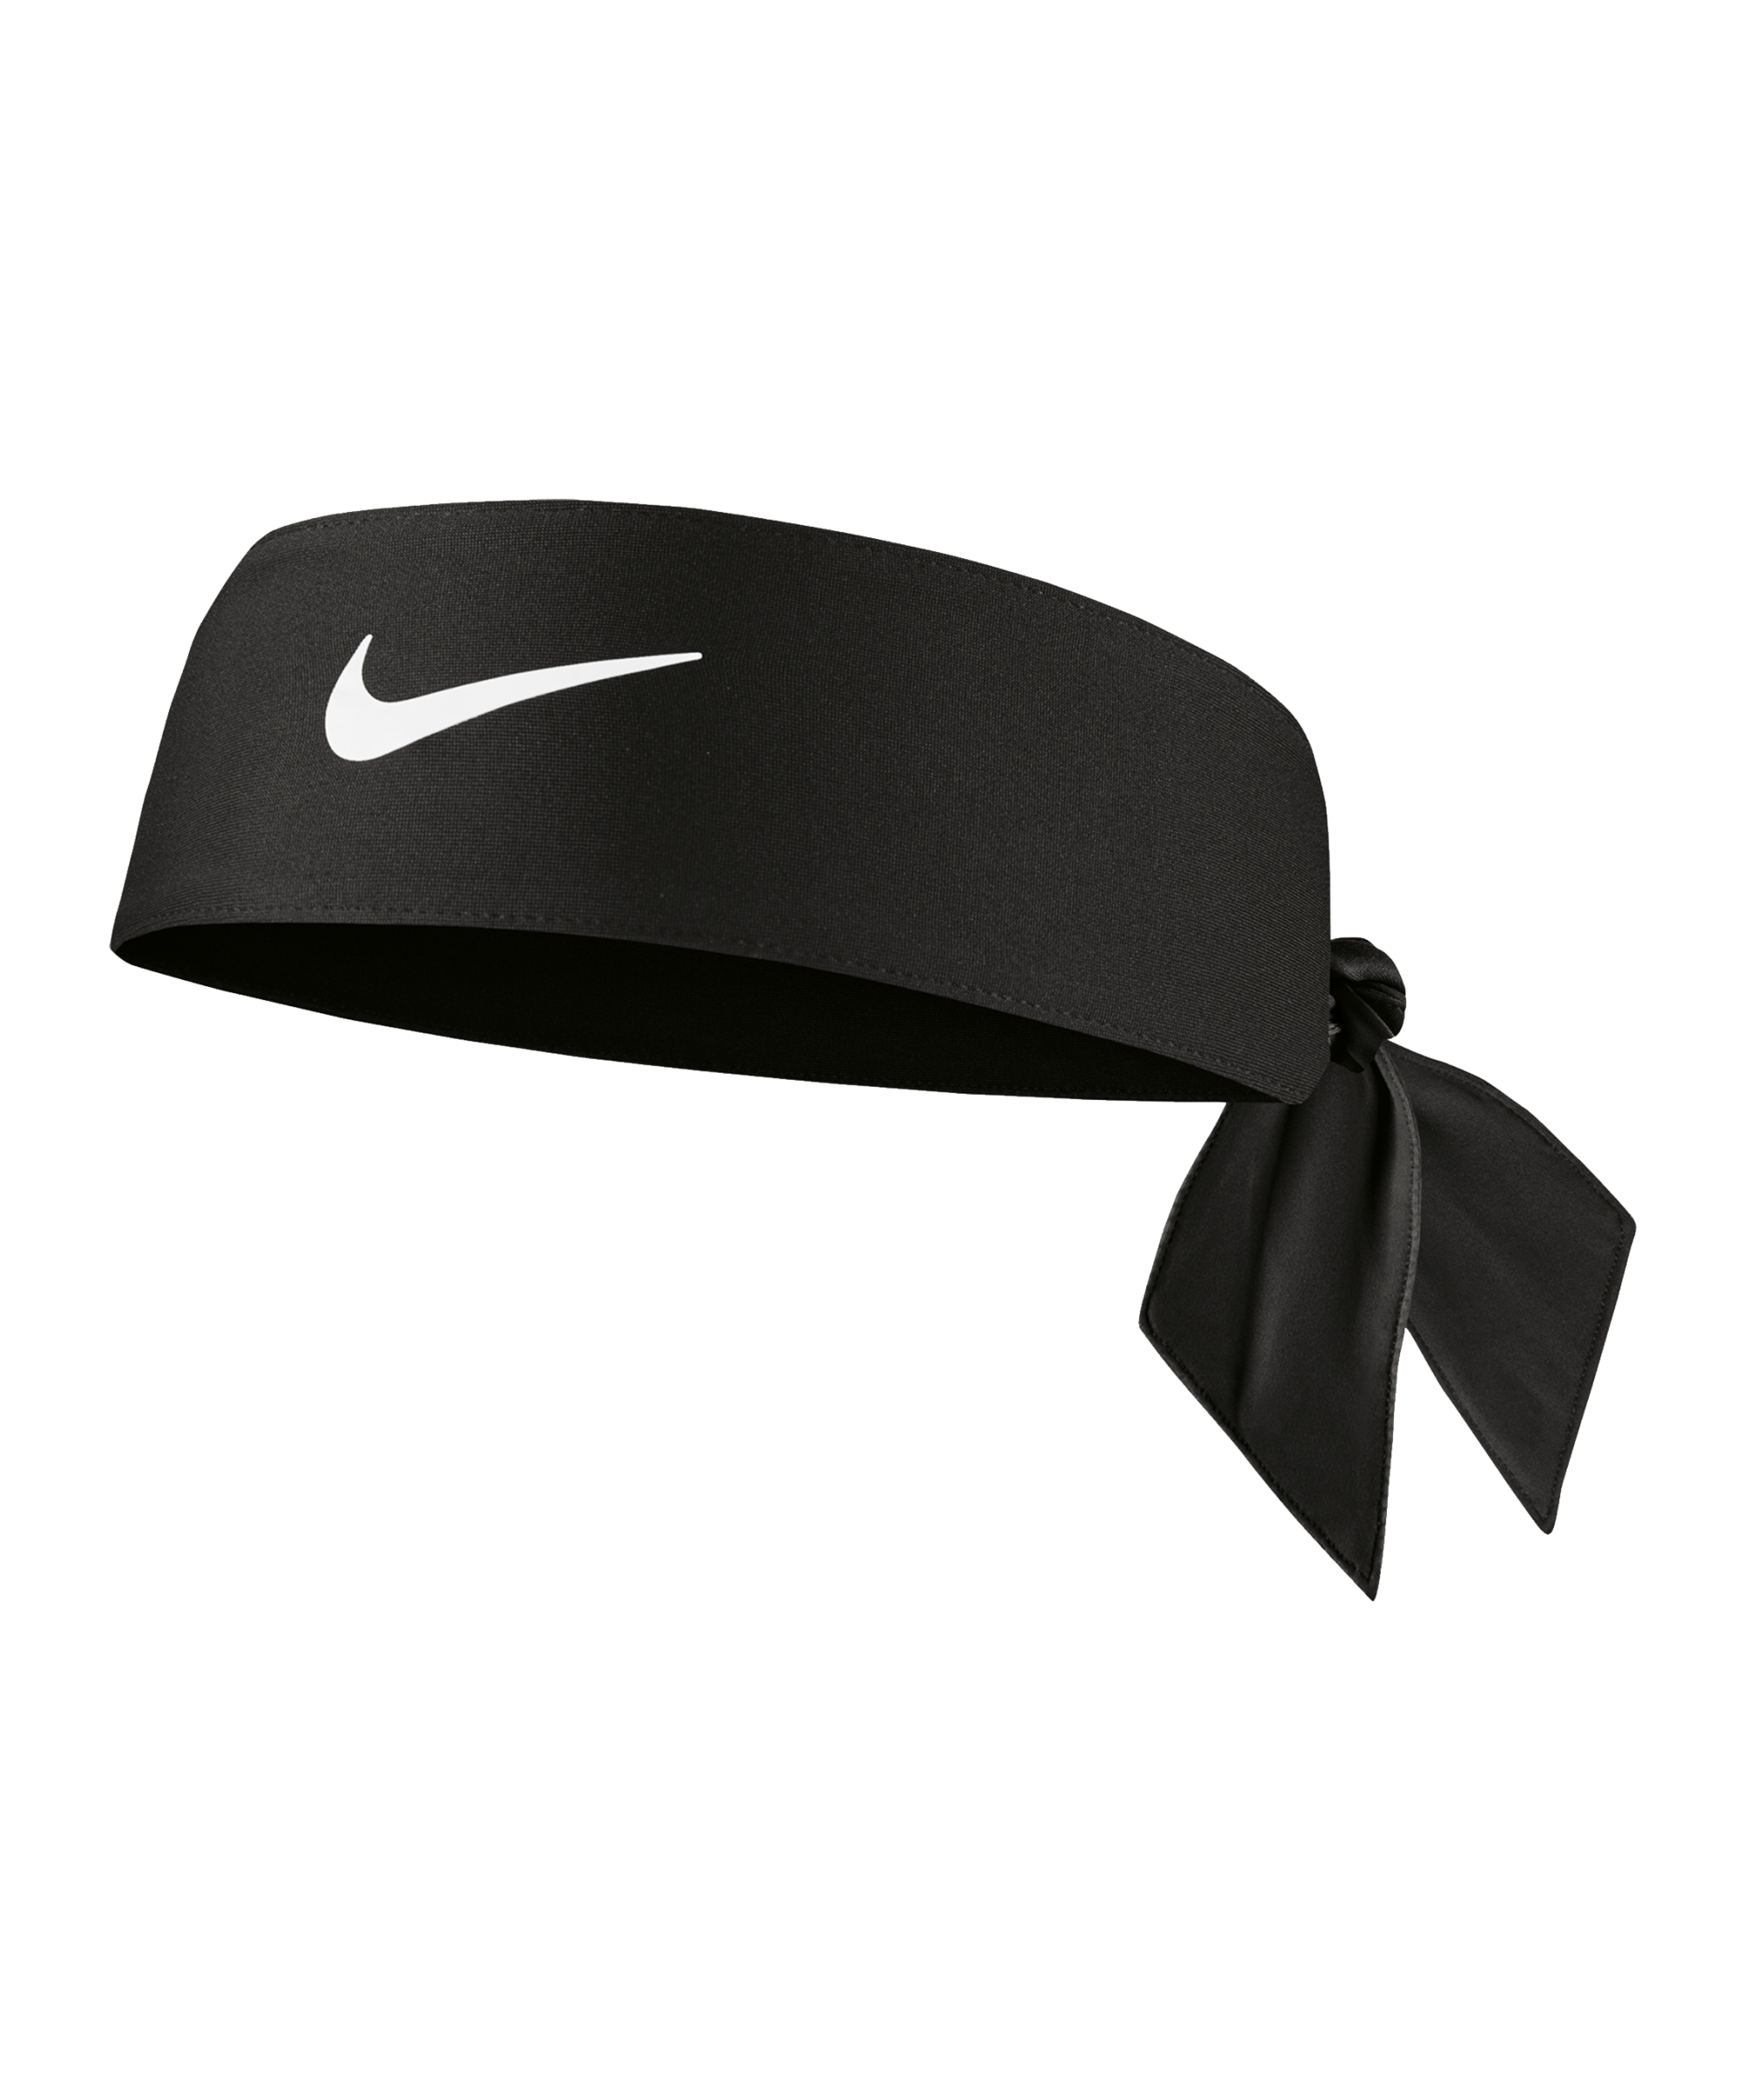 Fita para cabeça Nike DRI-FIT HEAD TIE 4.0